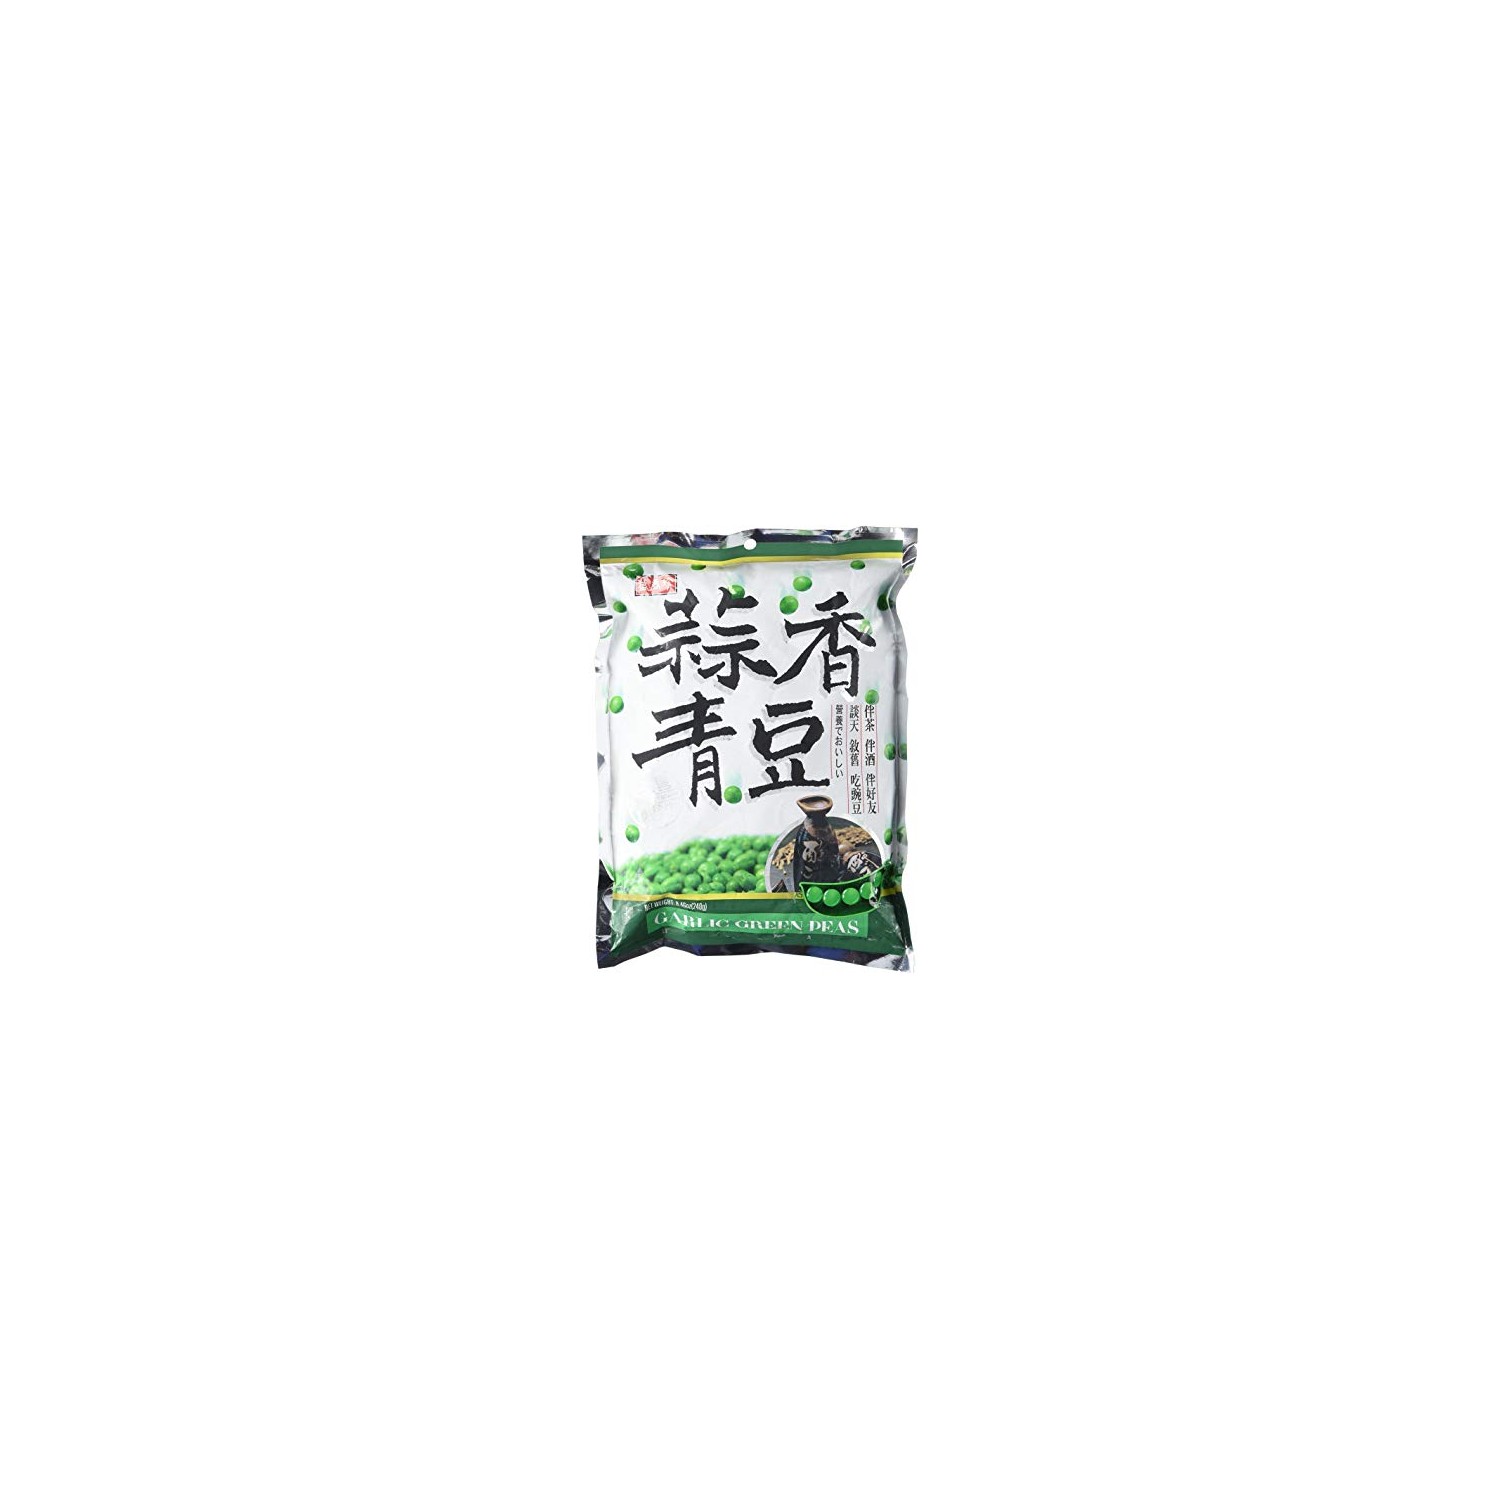 TF - Garlic Green Peas